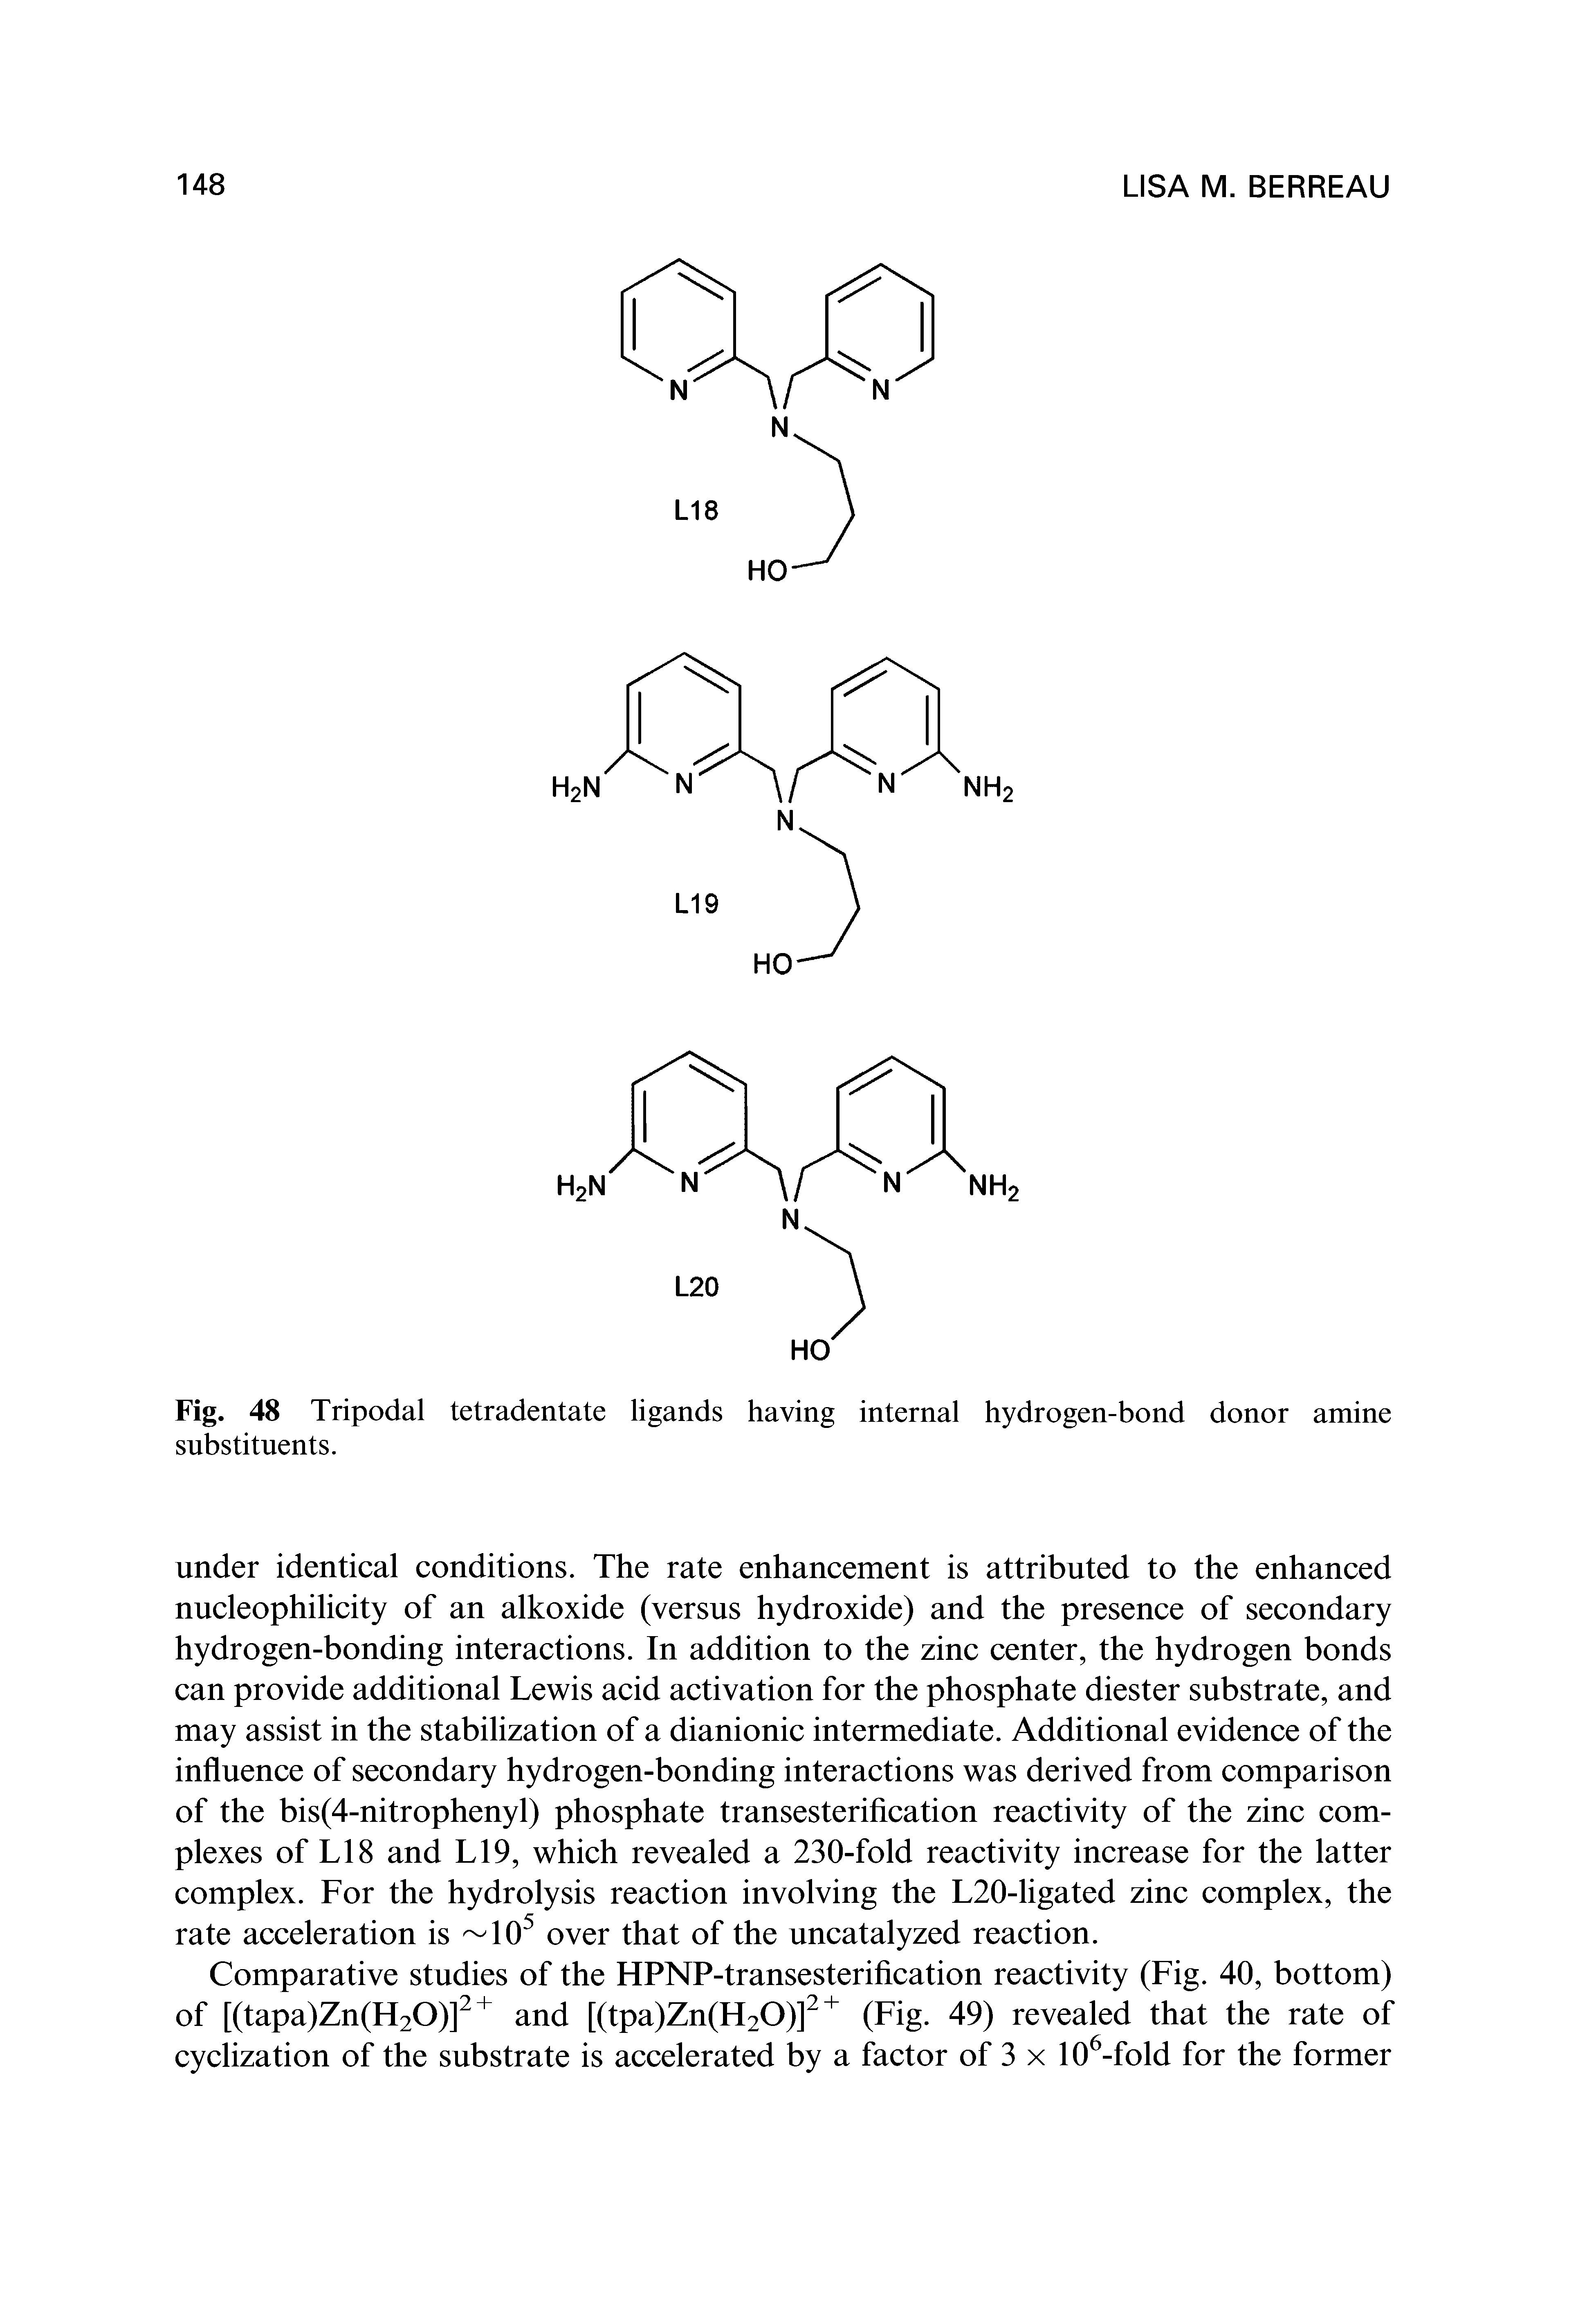 Fig. 48 Tripodal tetradentate ligands having internal hydrogen-bond donor amine substituents.